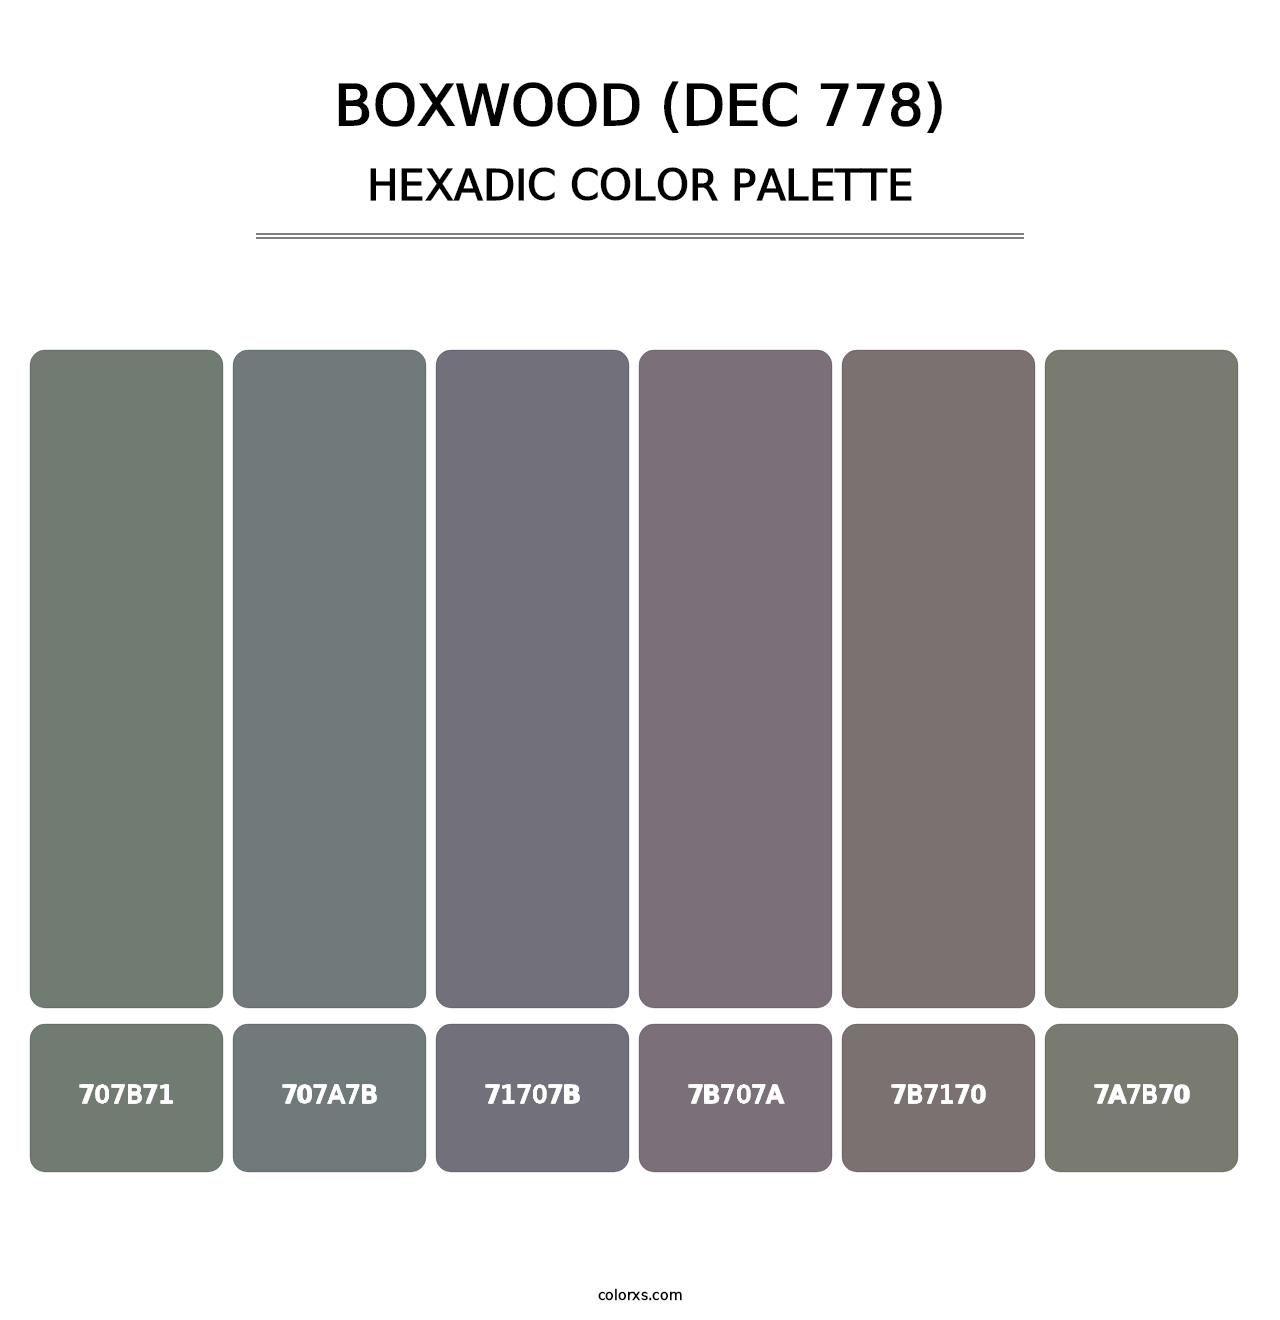 Boxwood (DEC 778) - Hexadic Color Palette